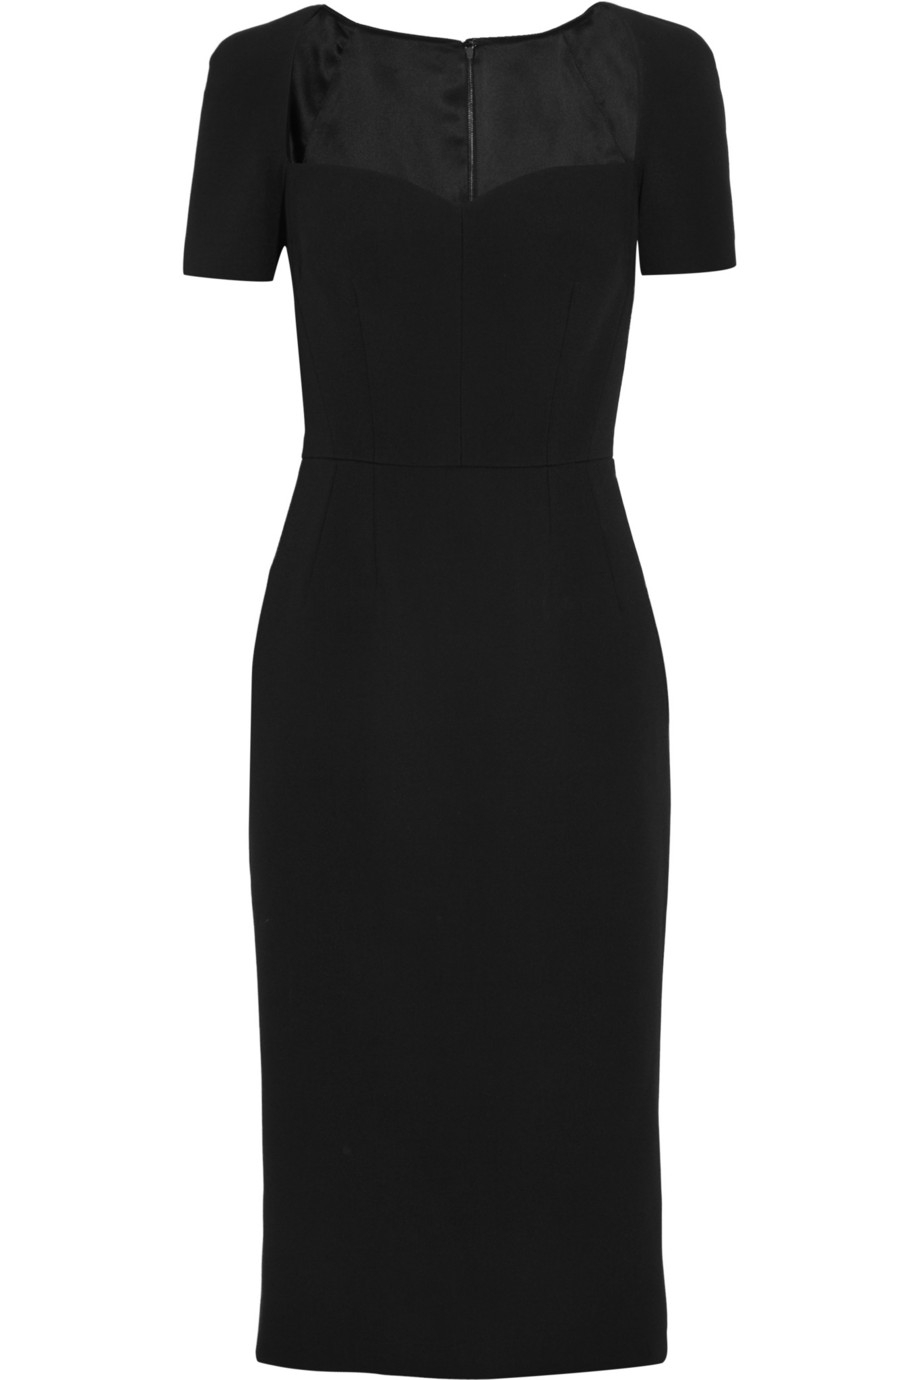 Dolce & Gabbana Crepe Pencil Dress in Black - Lyst